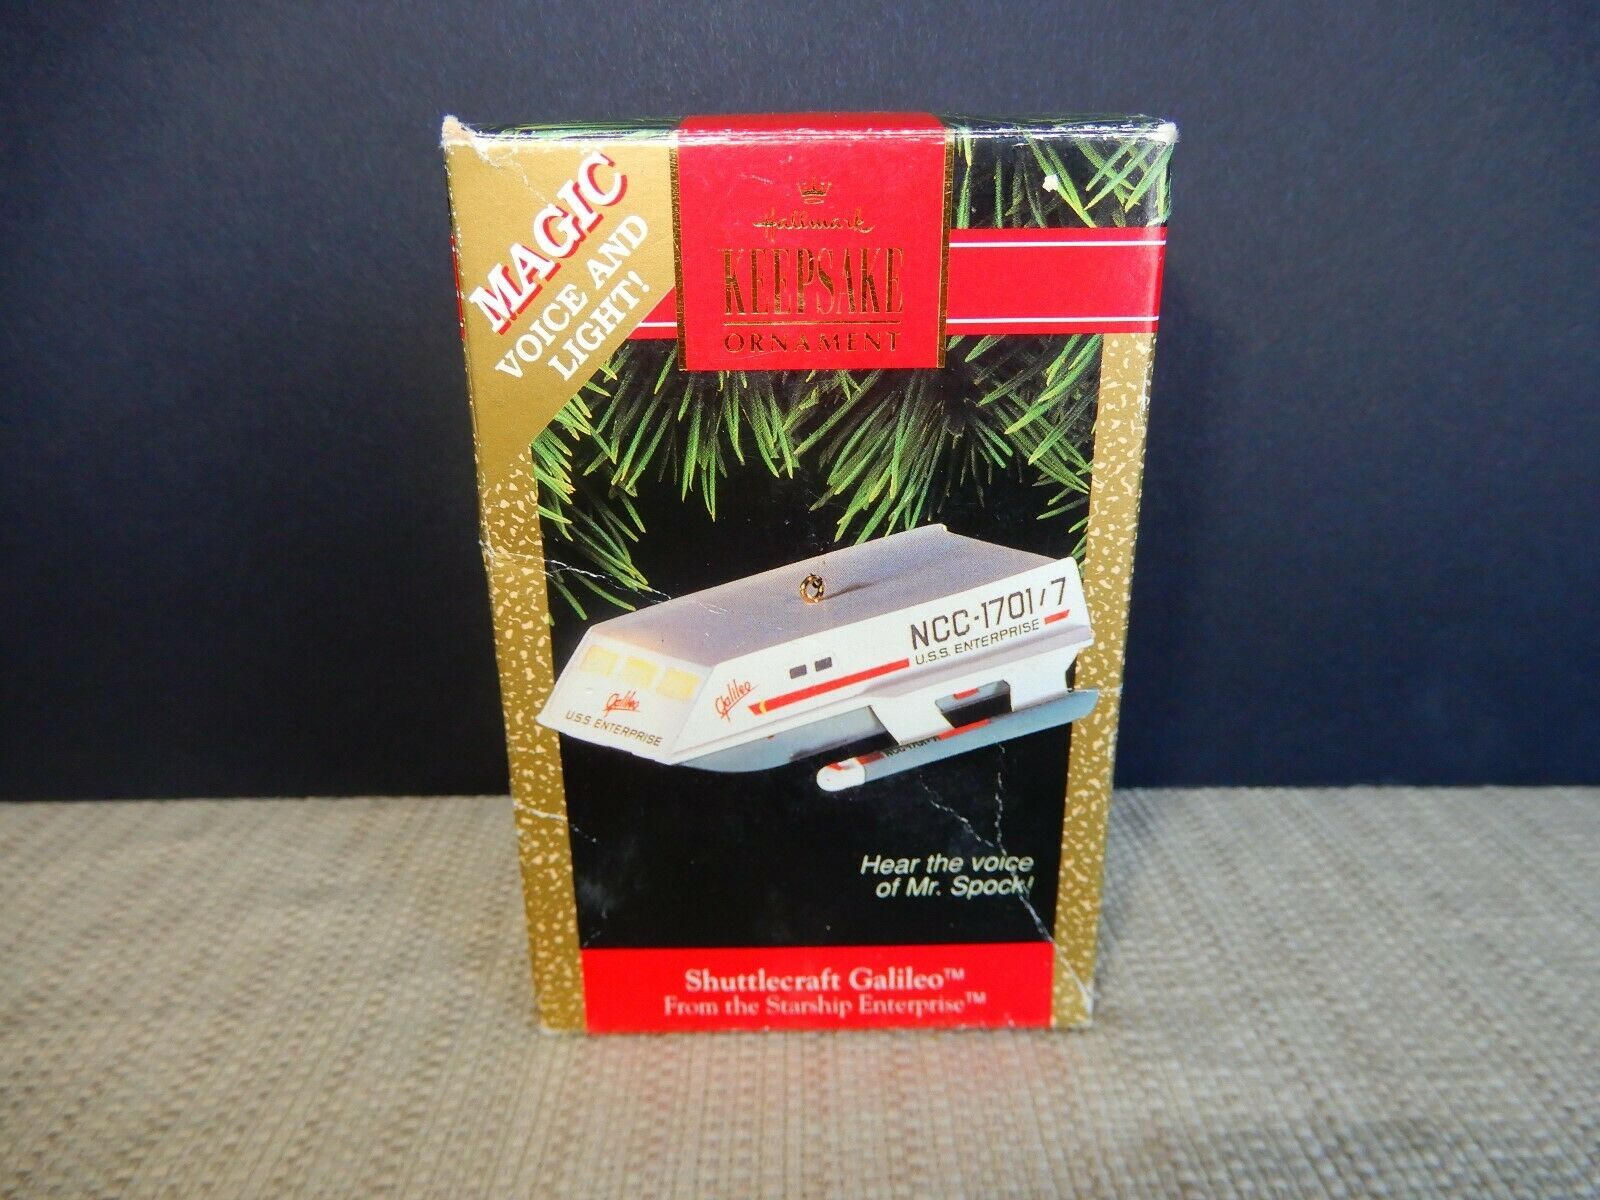 1992 Hallmark Star Trek Shuttlecraft Galileo Christmas ornament in original box - $20.00